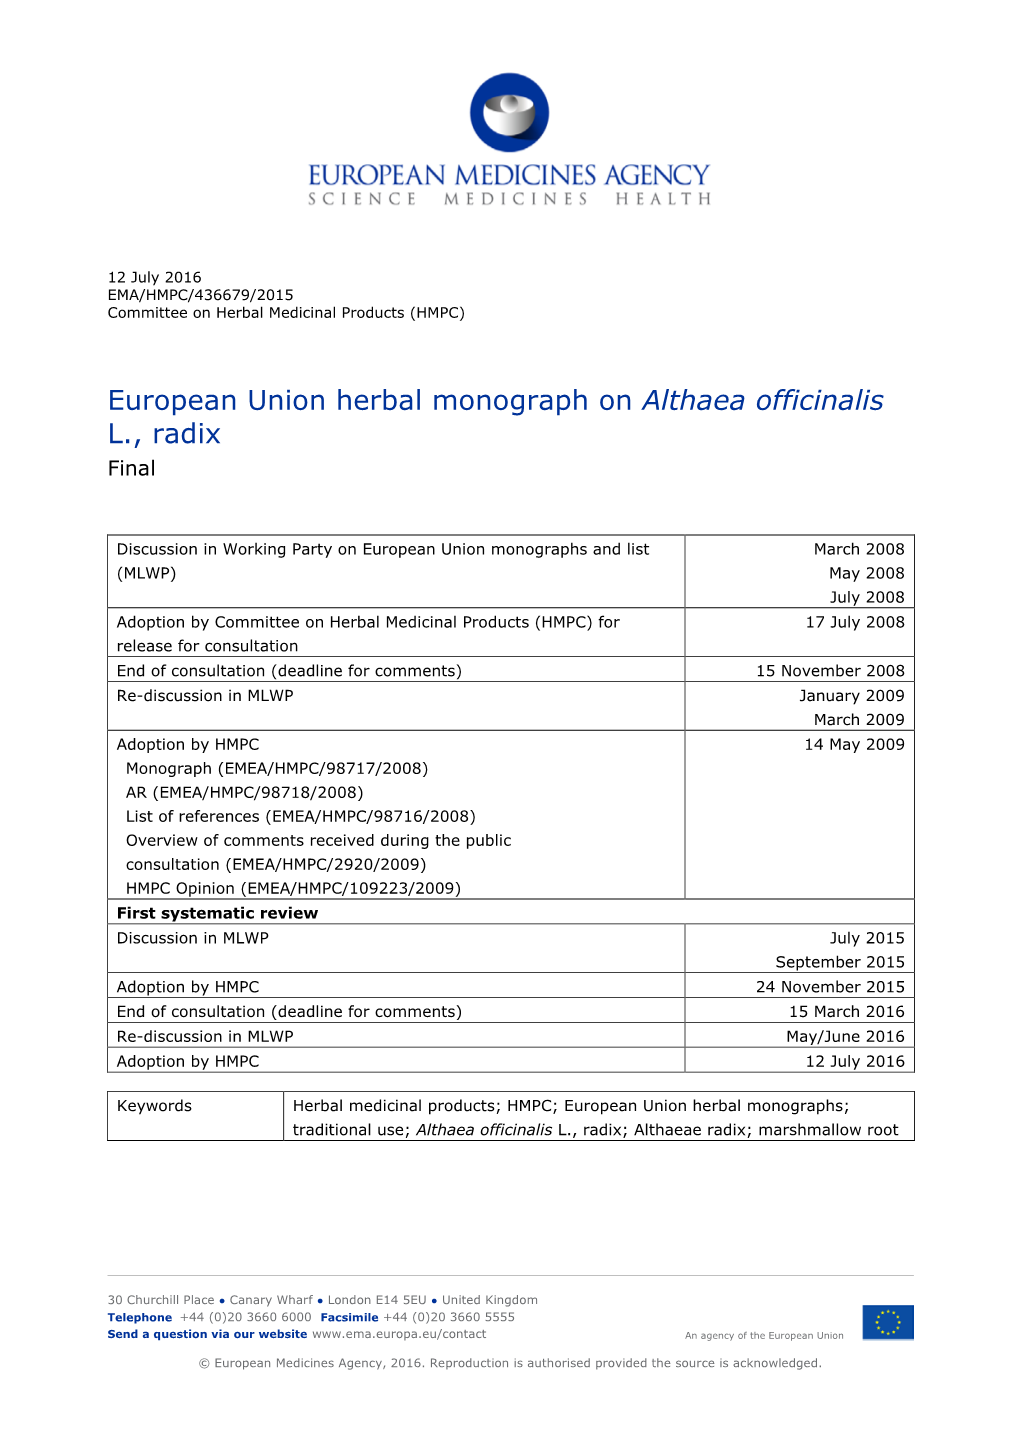 European Union Herbal Monograph on Althaea Officinalis L., Radix Final